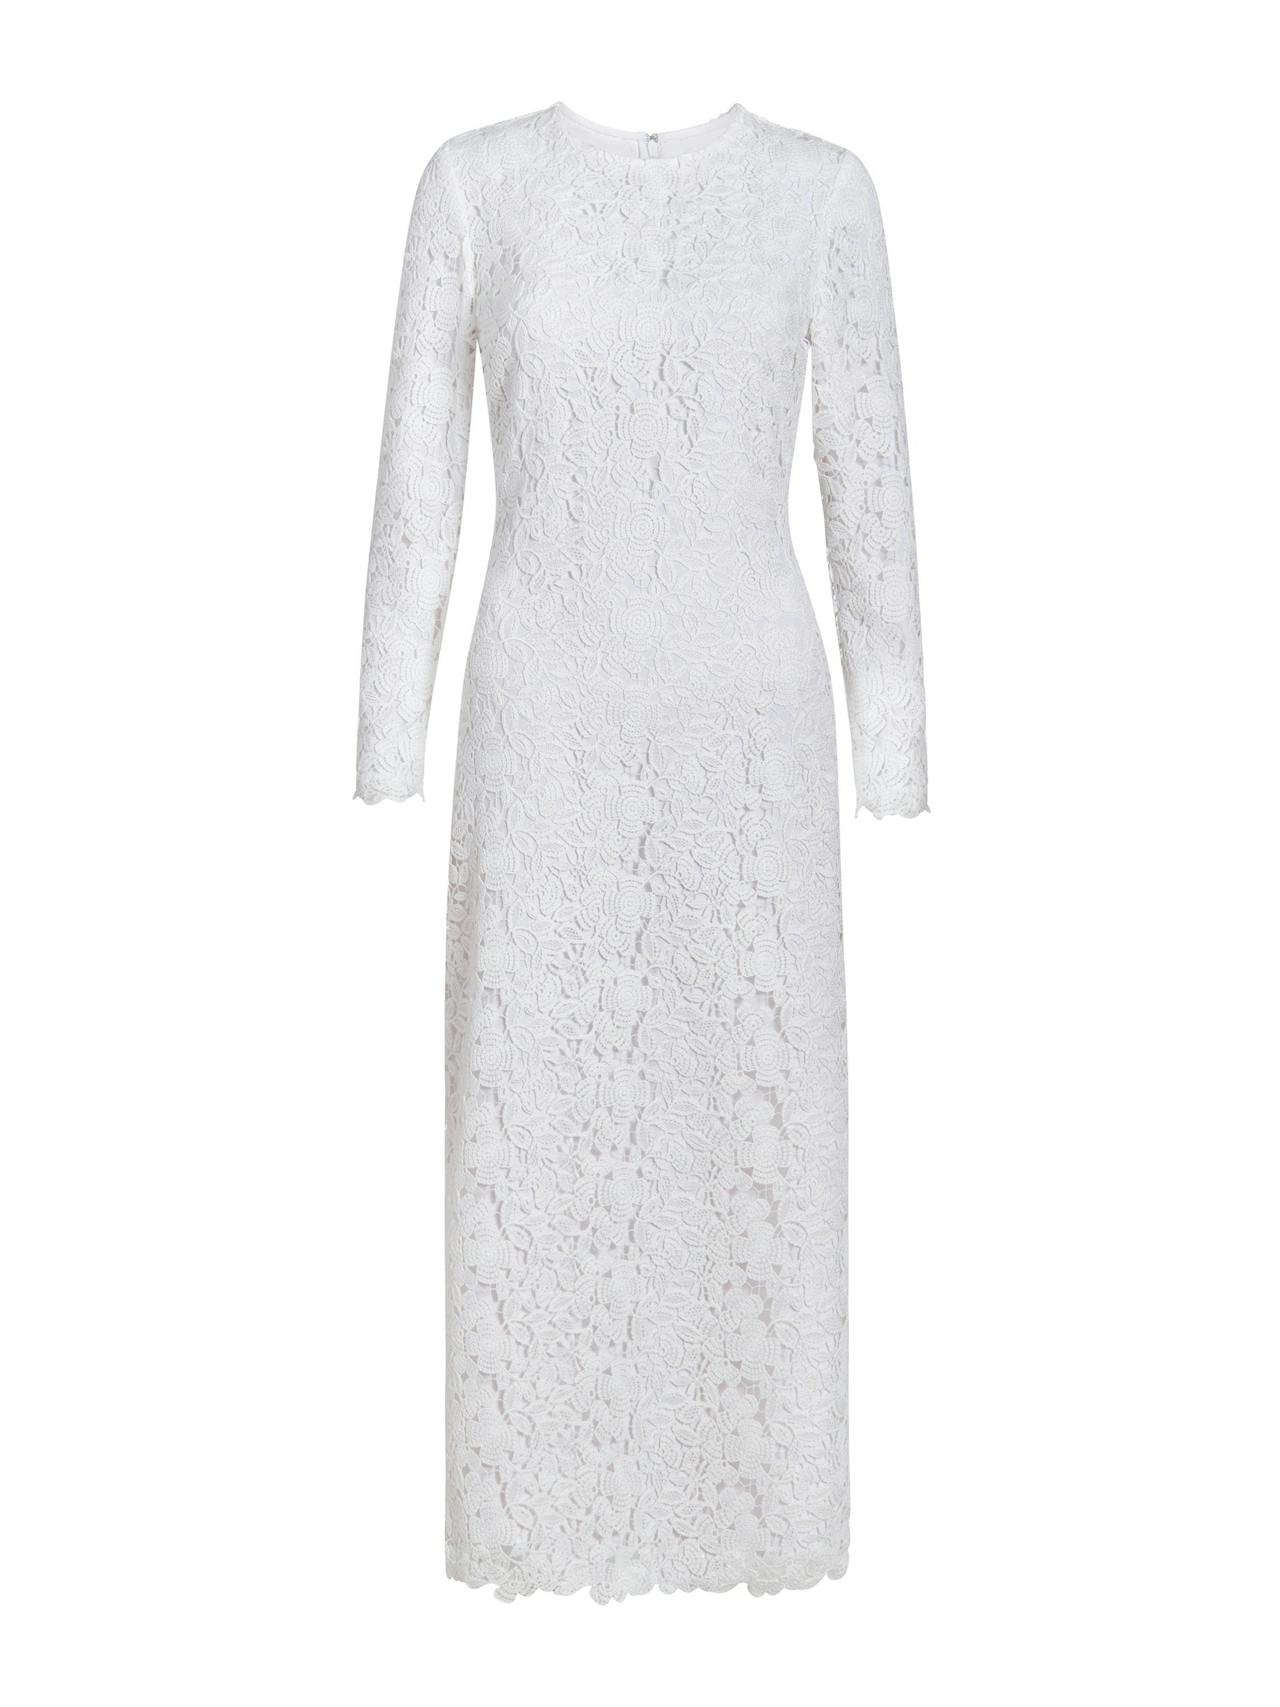 White crochet lace Arizona midi dress